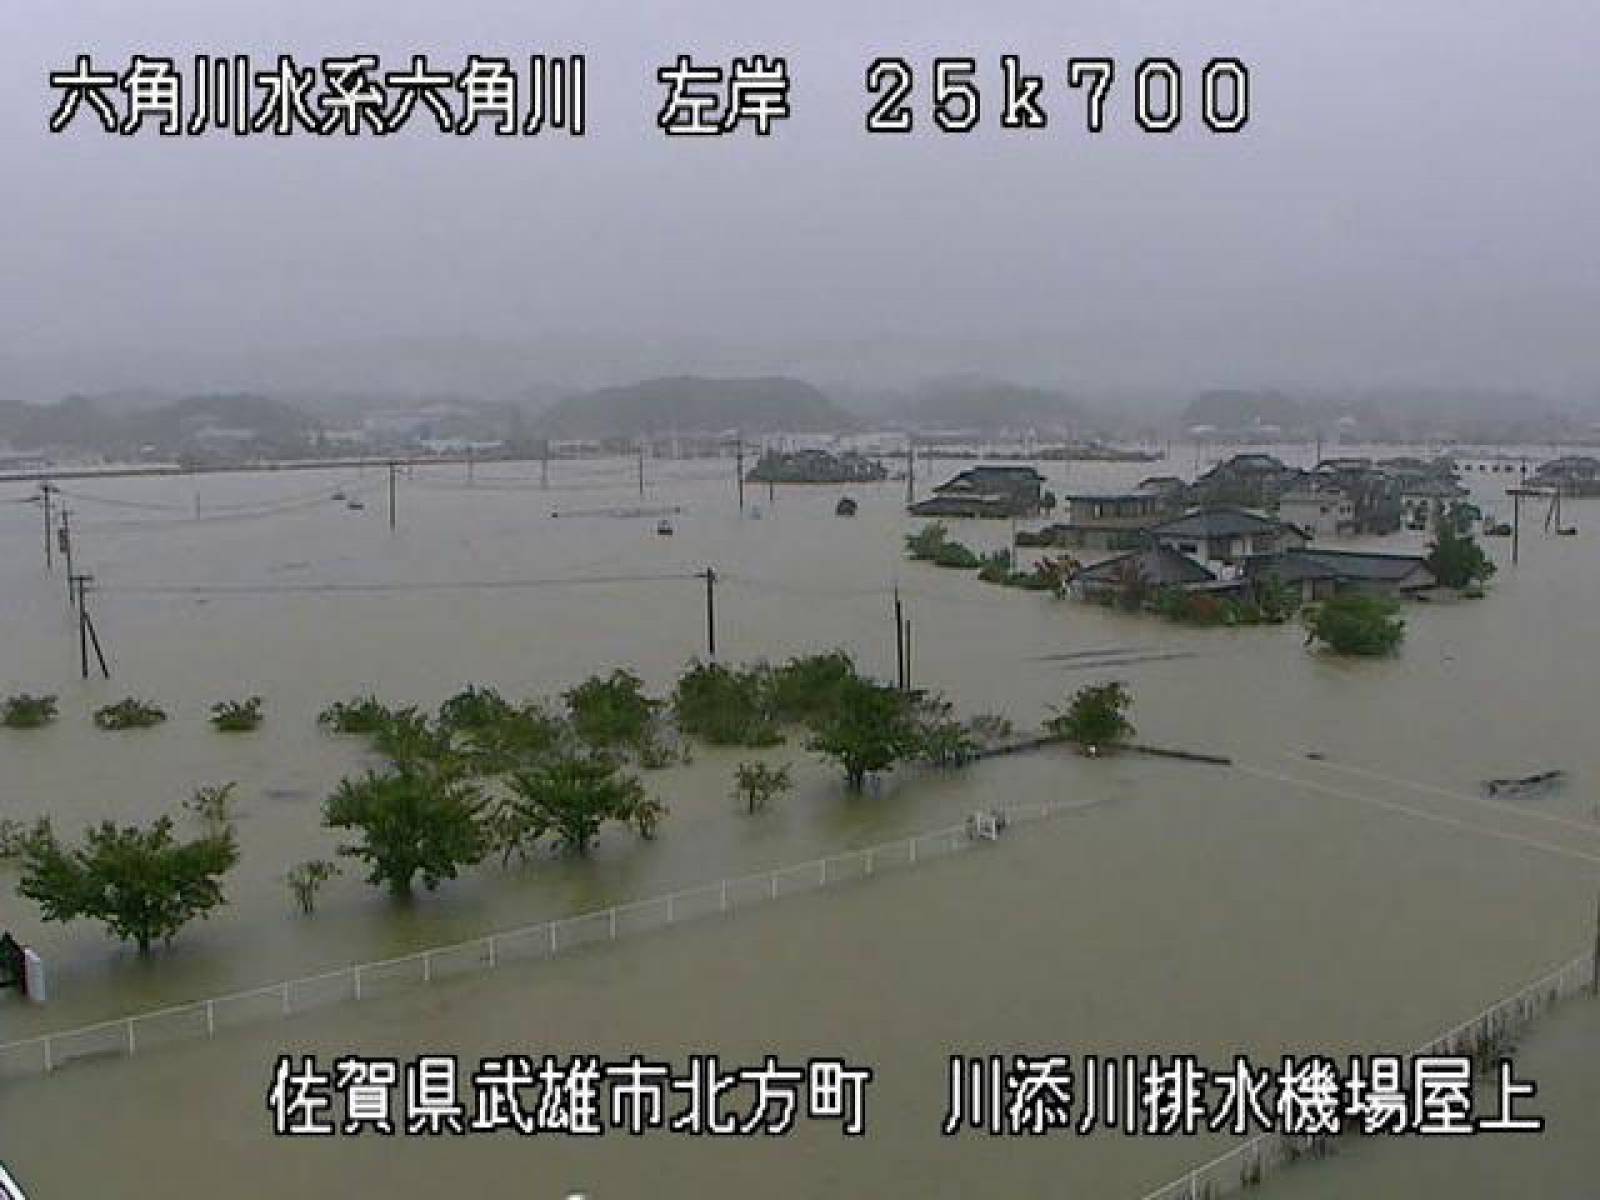 The video grab image shows swollen Rokkaku River in Takeo, Saga prefecture, Japan